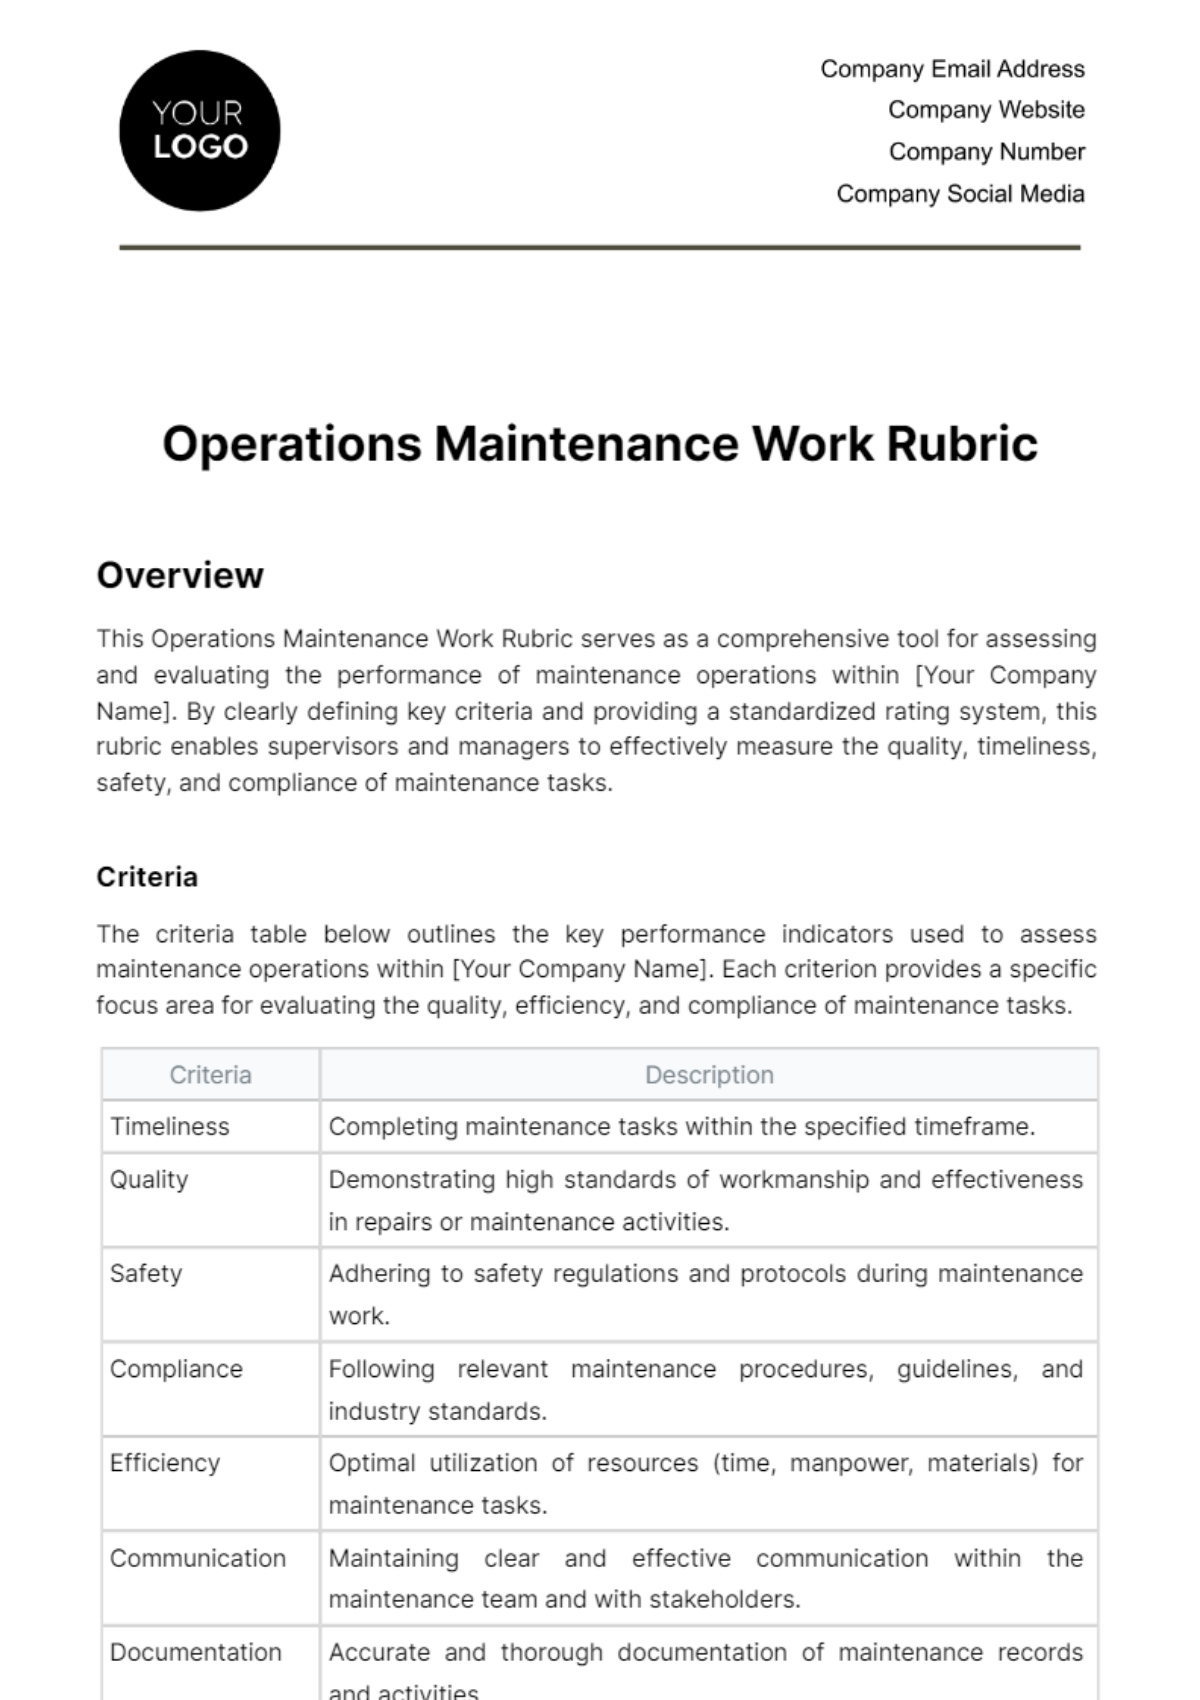 Operations Maintenance Work Rubric Template